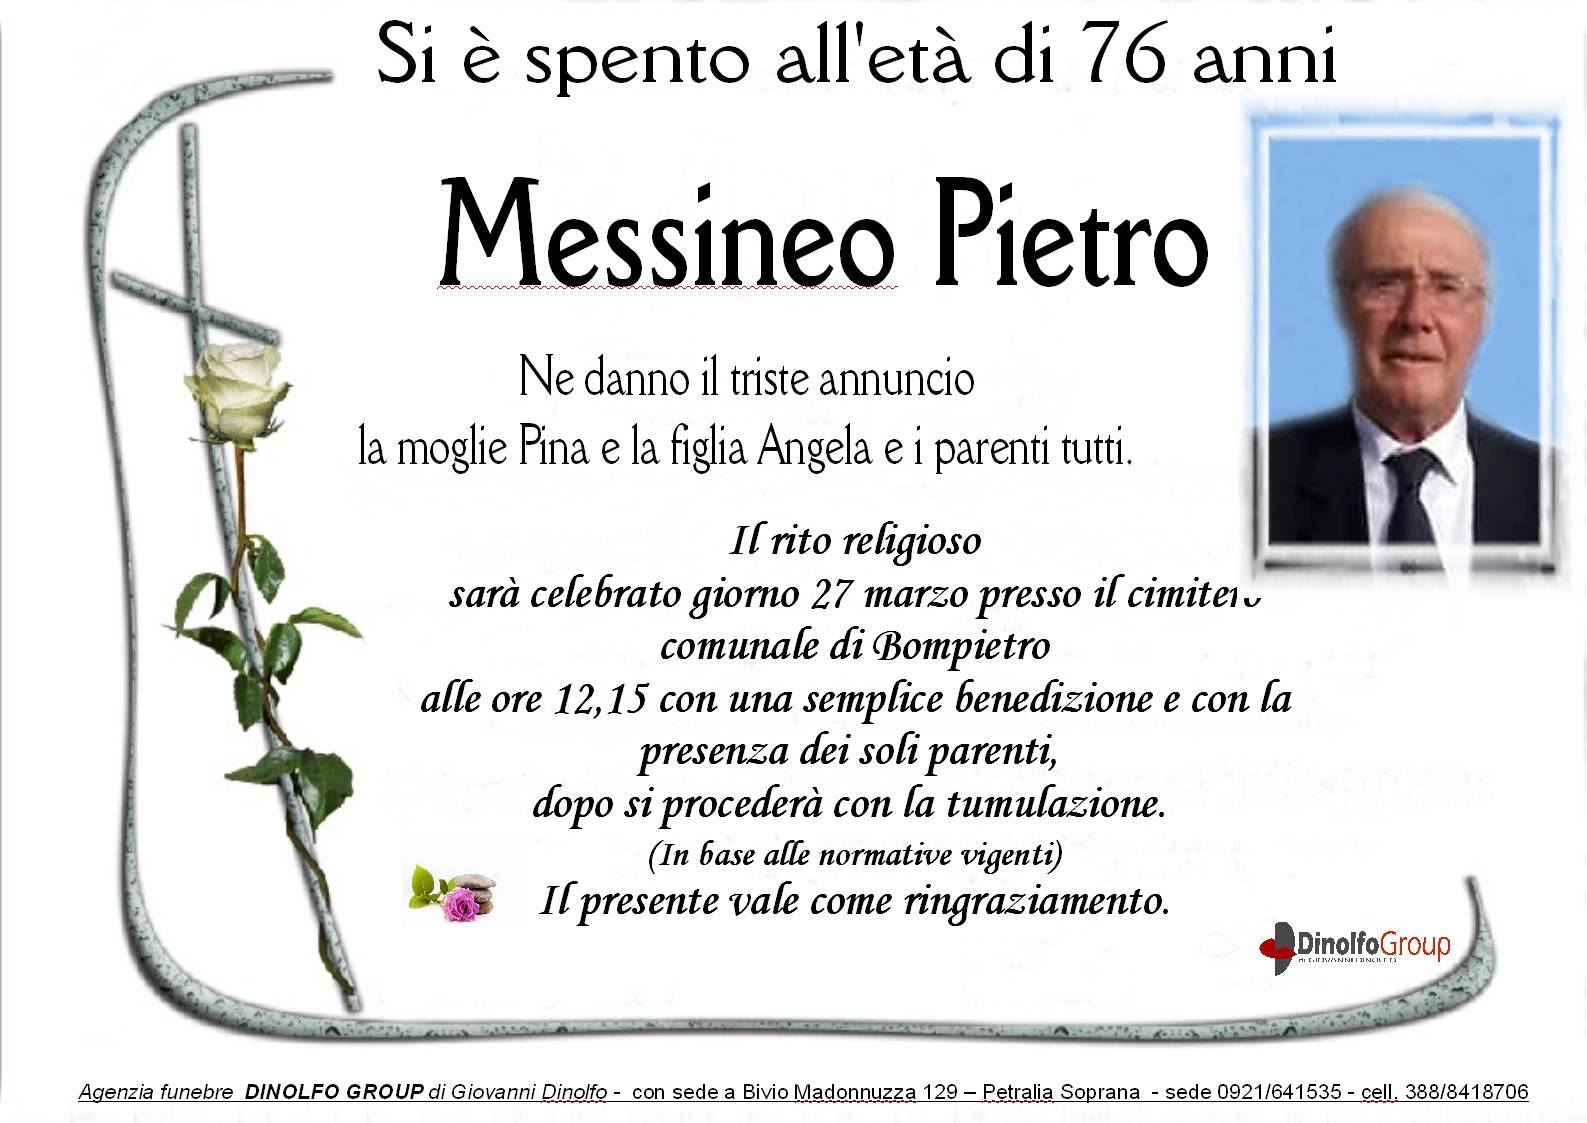 Pietro Messineo